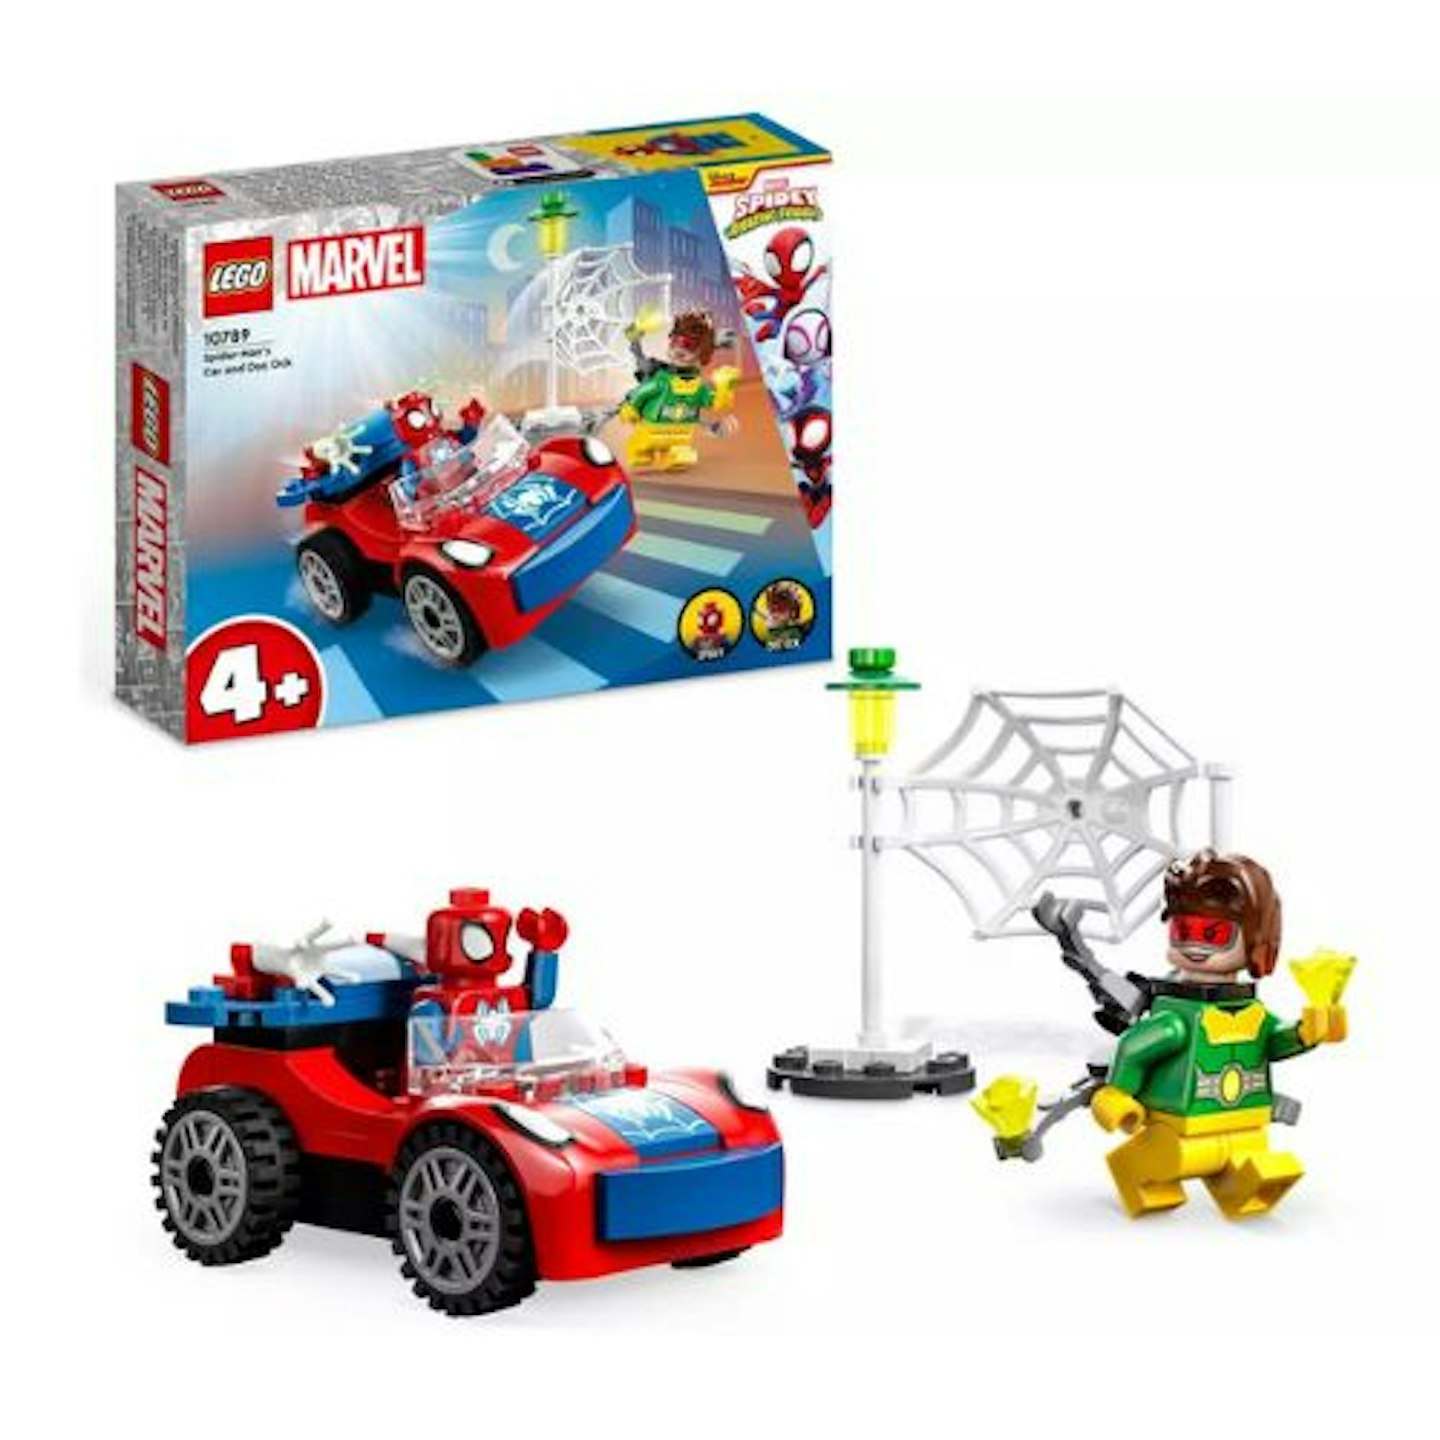 Best Disney toys LEGO Marvel Spider-Man's Car and Doc Ock Building Toy